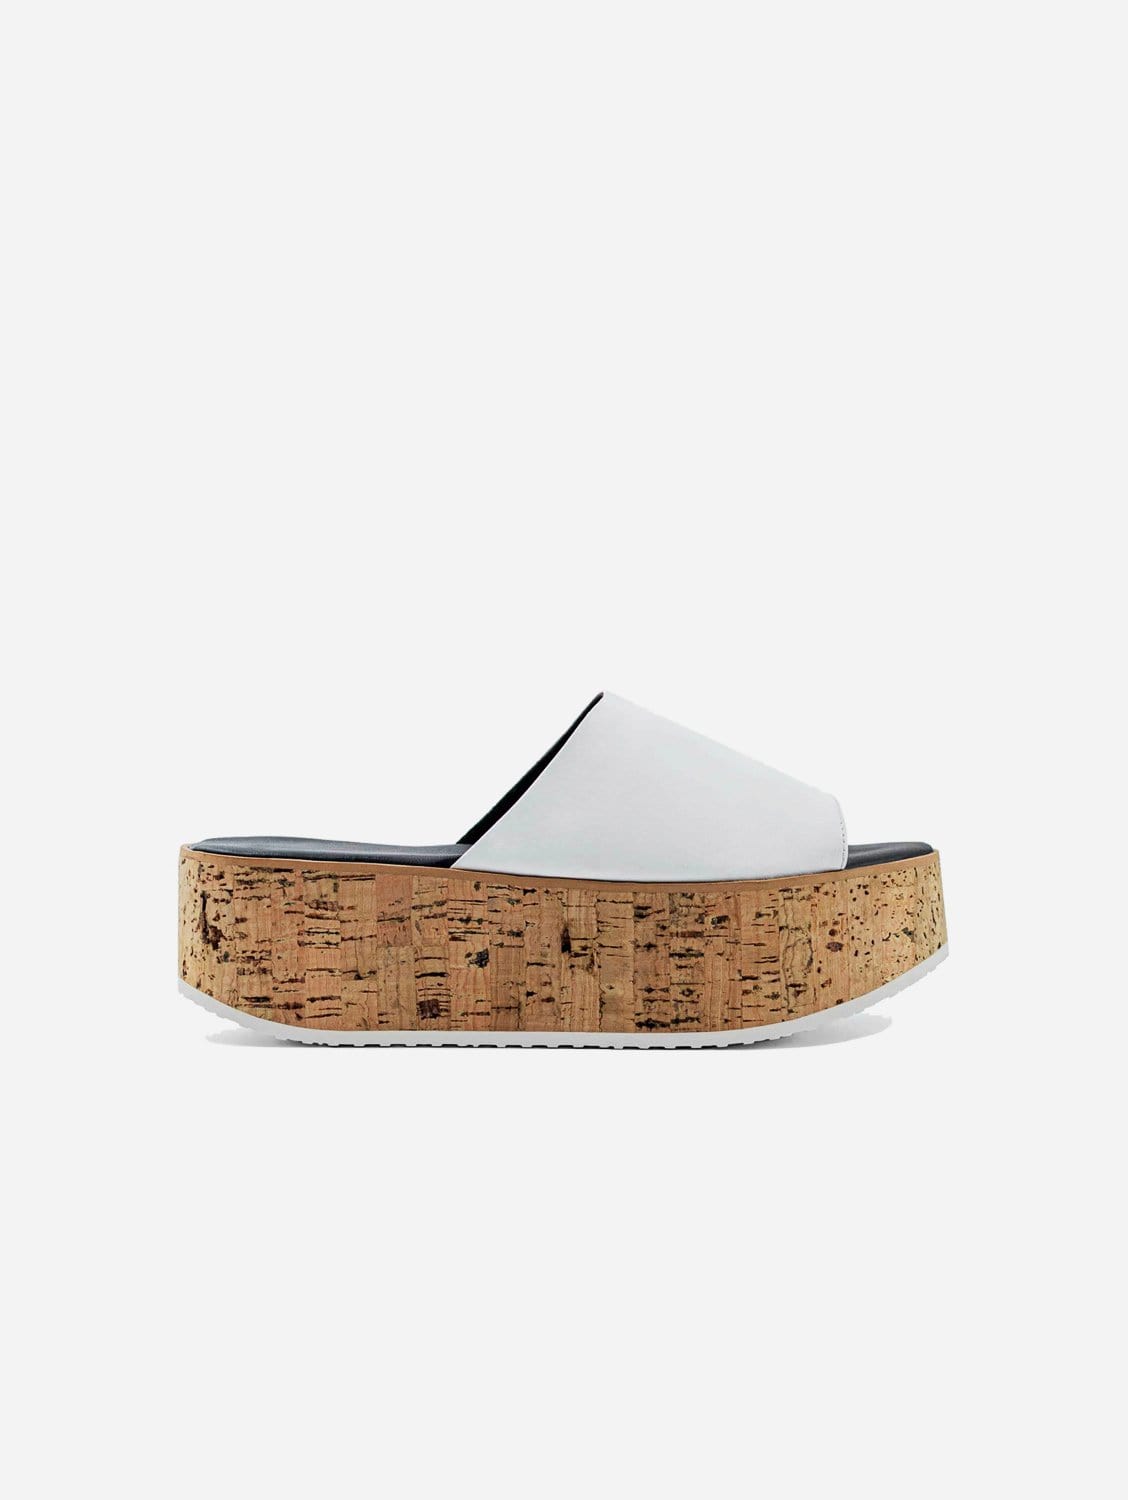 Bohema Geigi Grape Leather Cork Platform Vegan Sandals | White